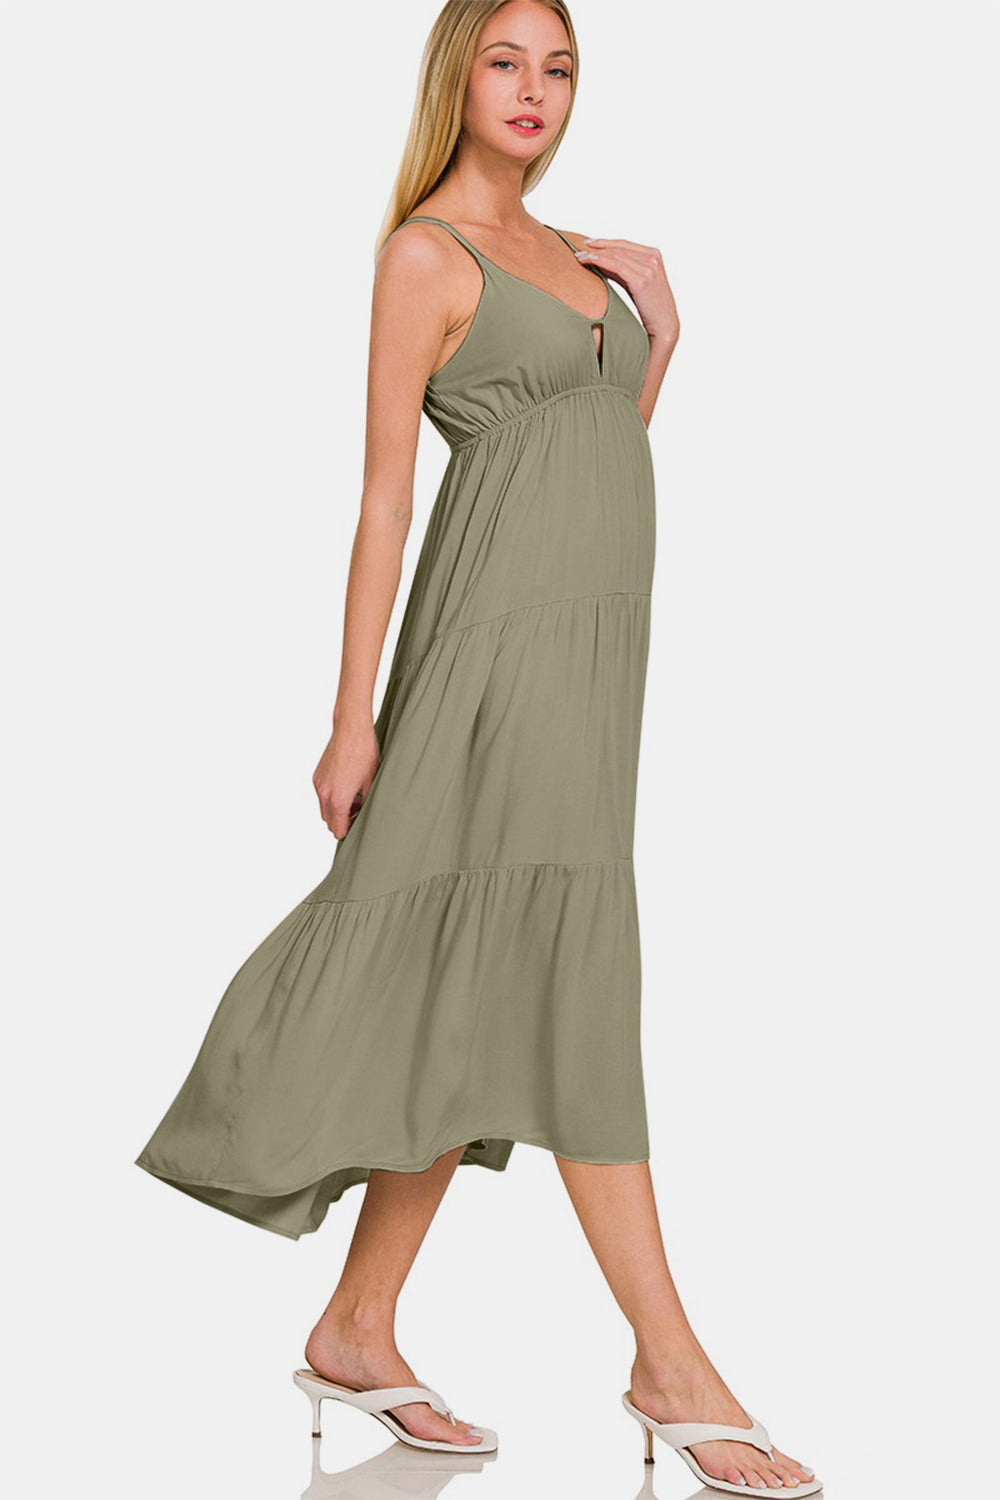 Mesa Verde Cami Dress